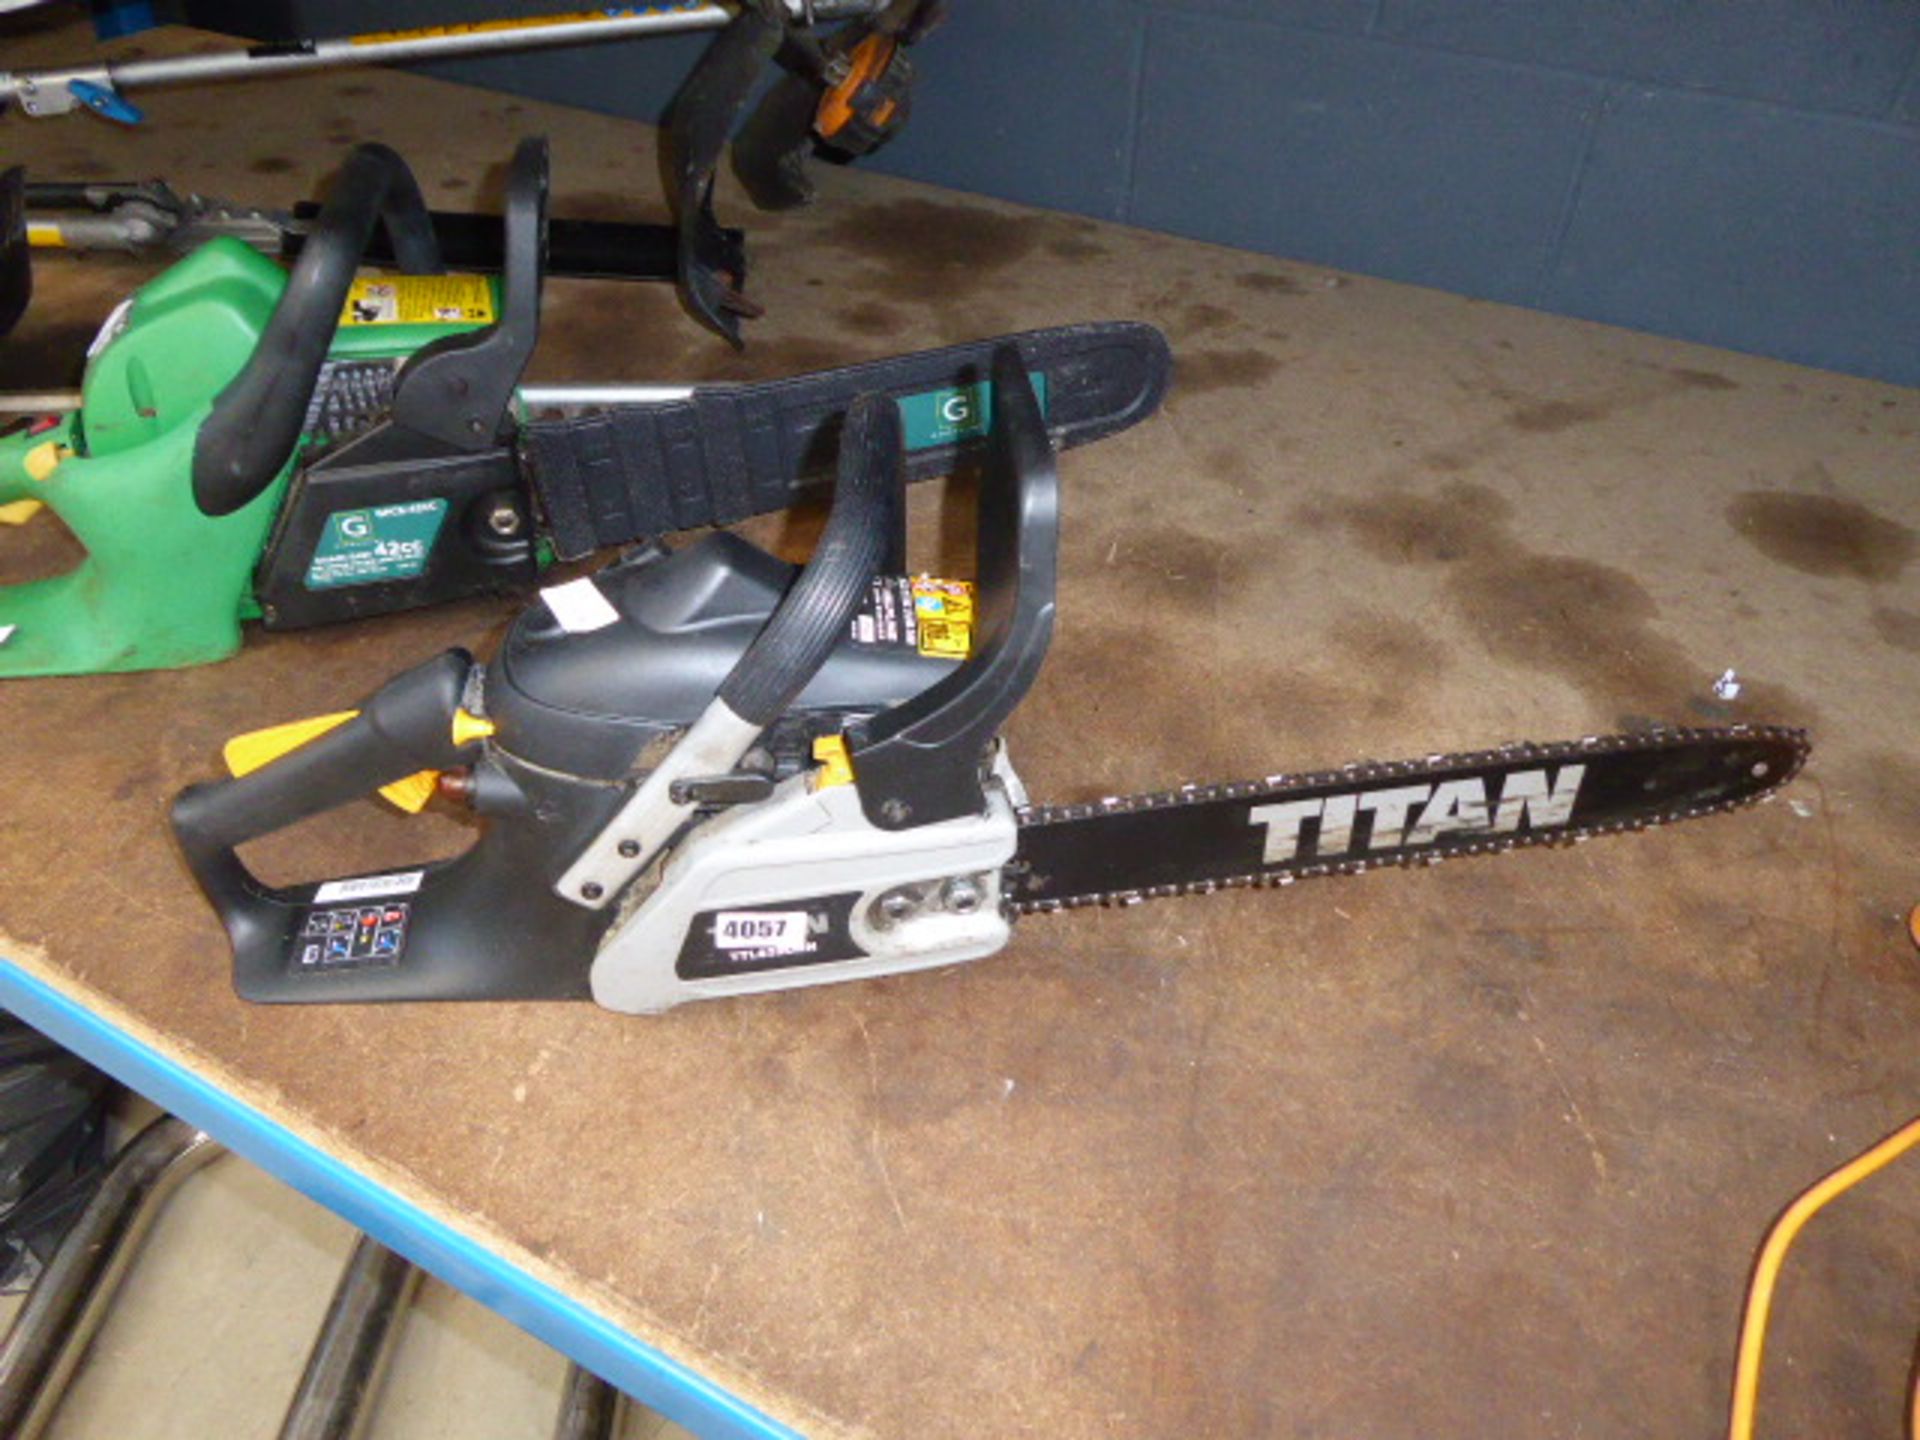 Titan petrol powered chainsaw